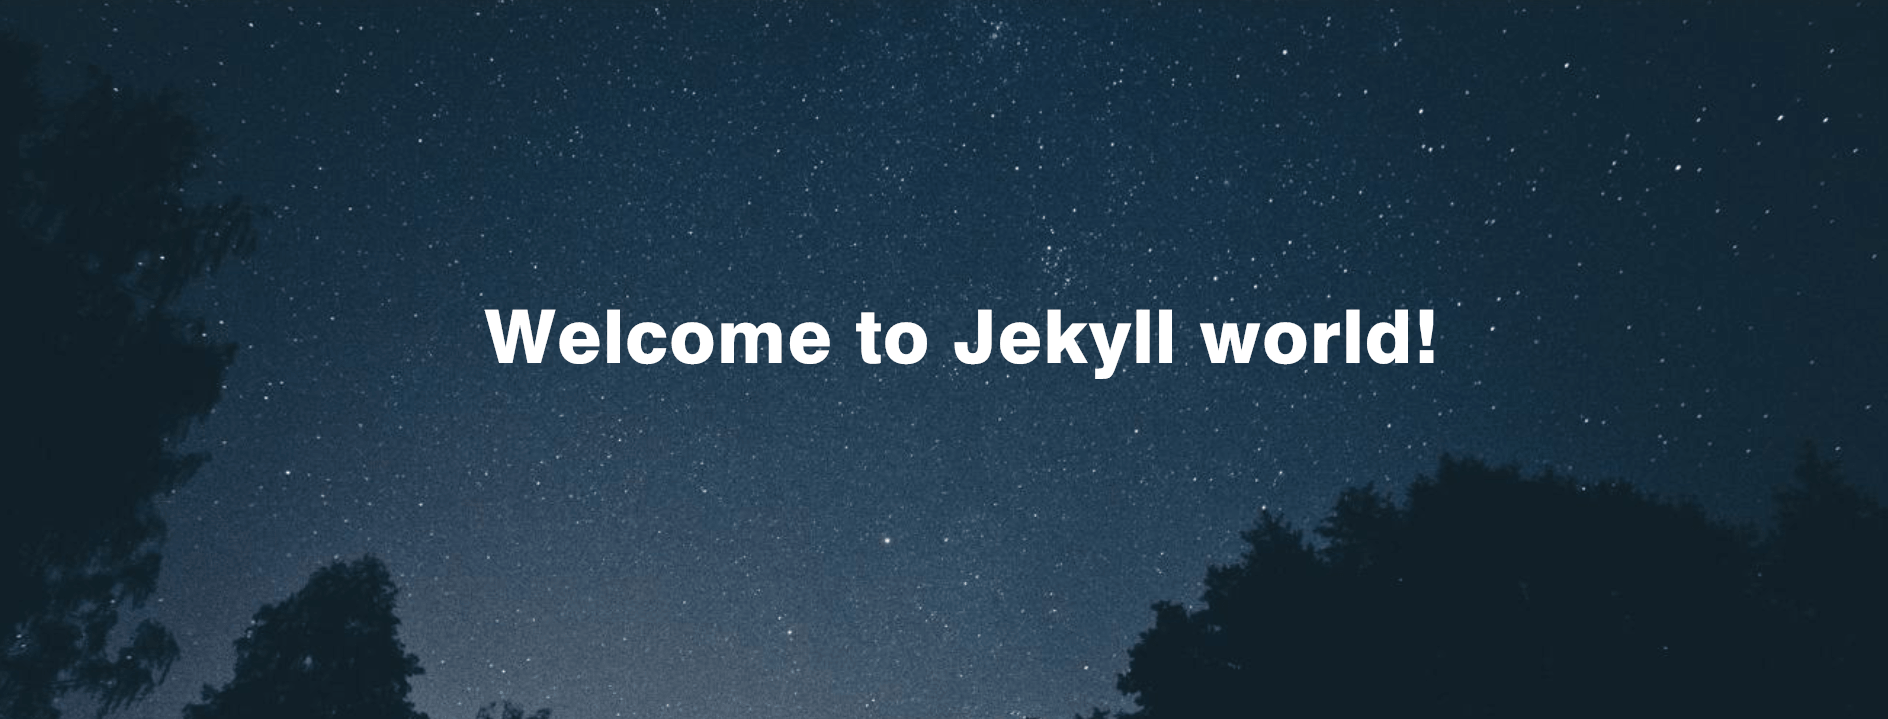 Jekyll theme pic